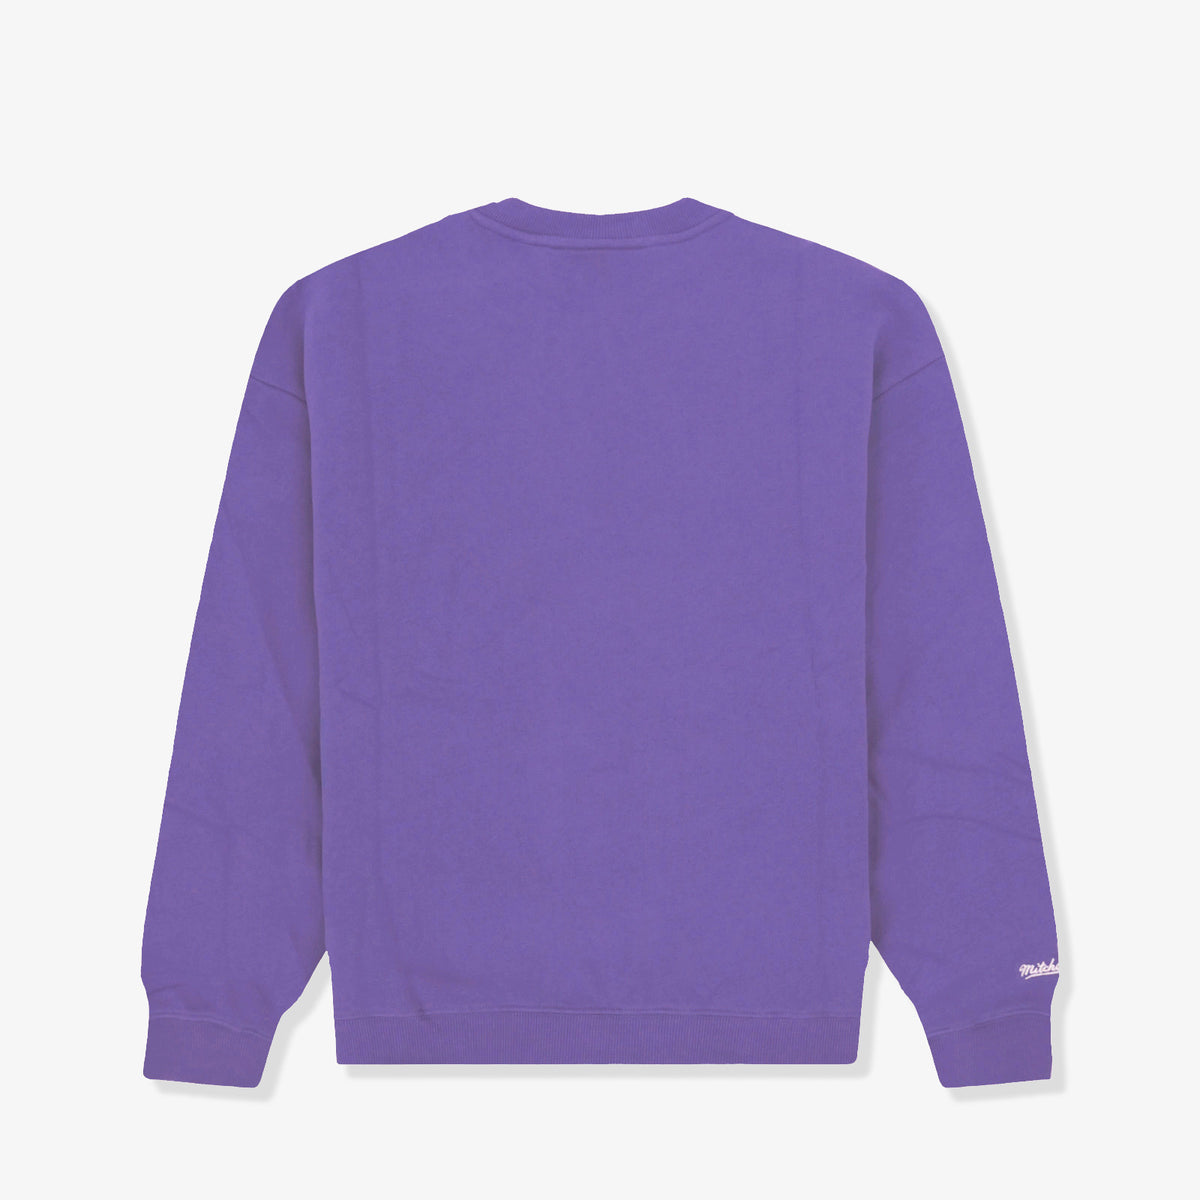 Los Angeles Lakers Team History Crew Sweatshirt - Faded Purple